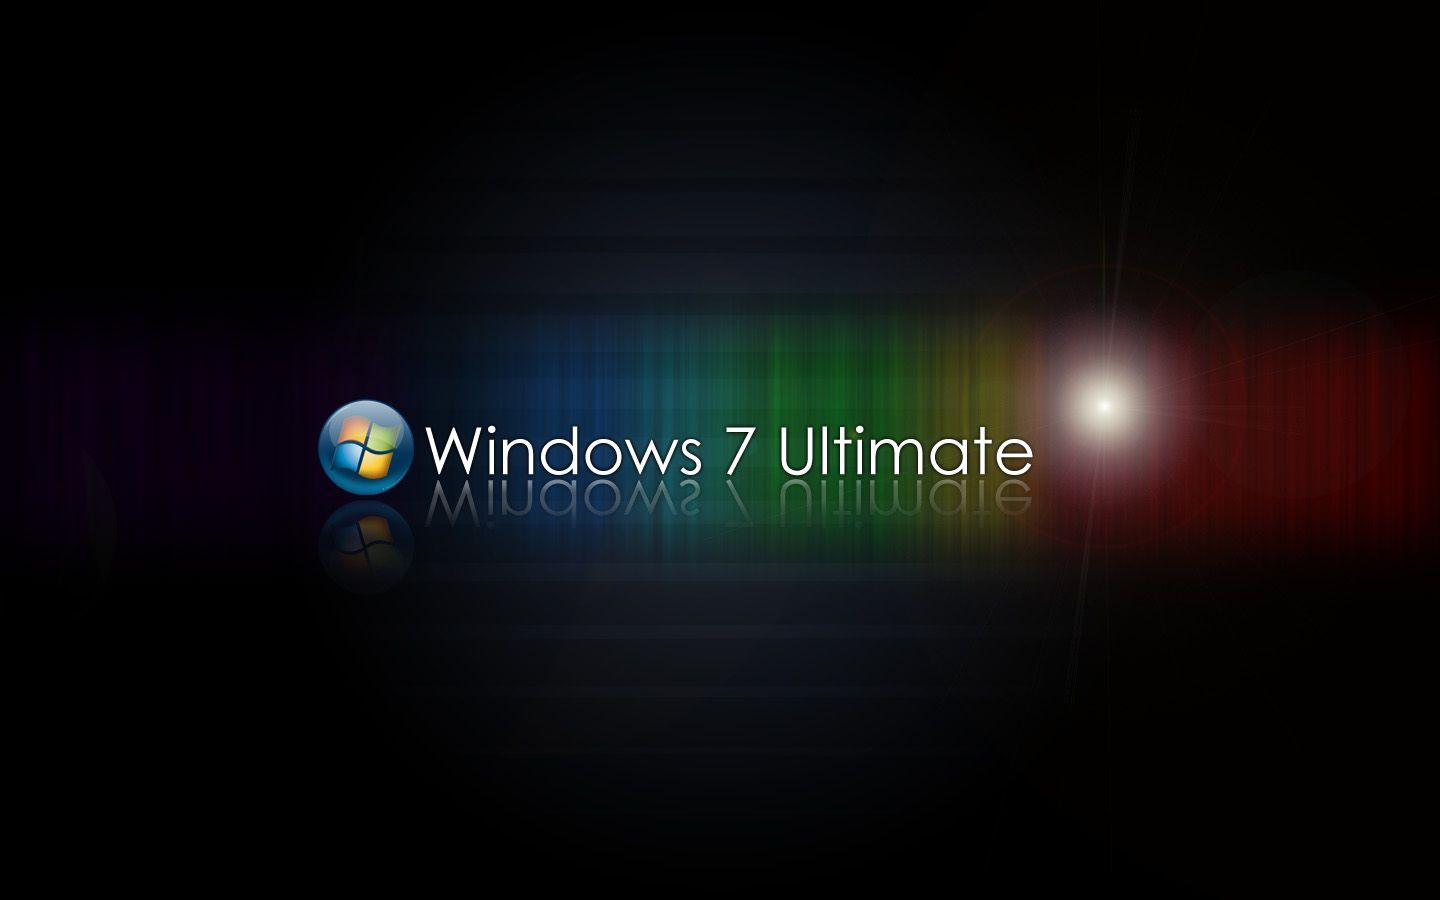 Moving Windows 7 Ultimate Wallpaper. windows 7 ultimate